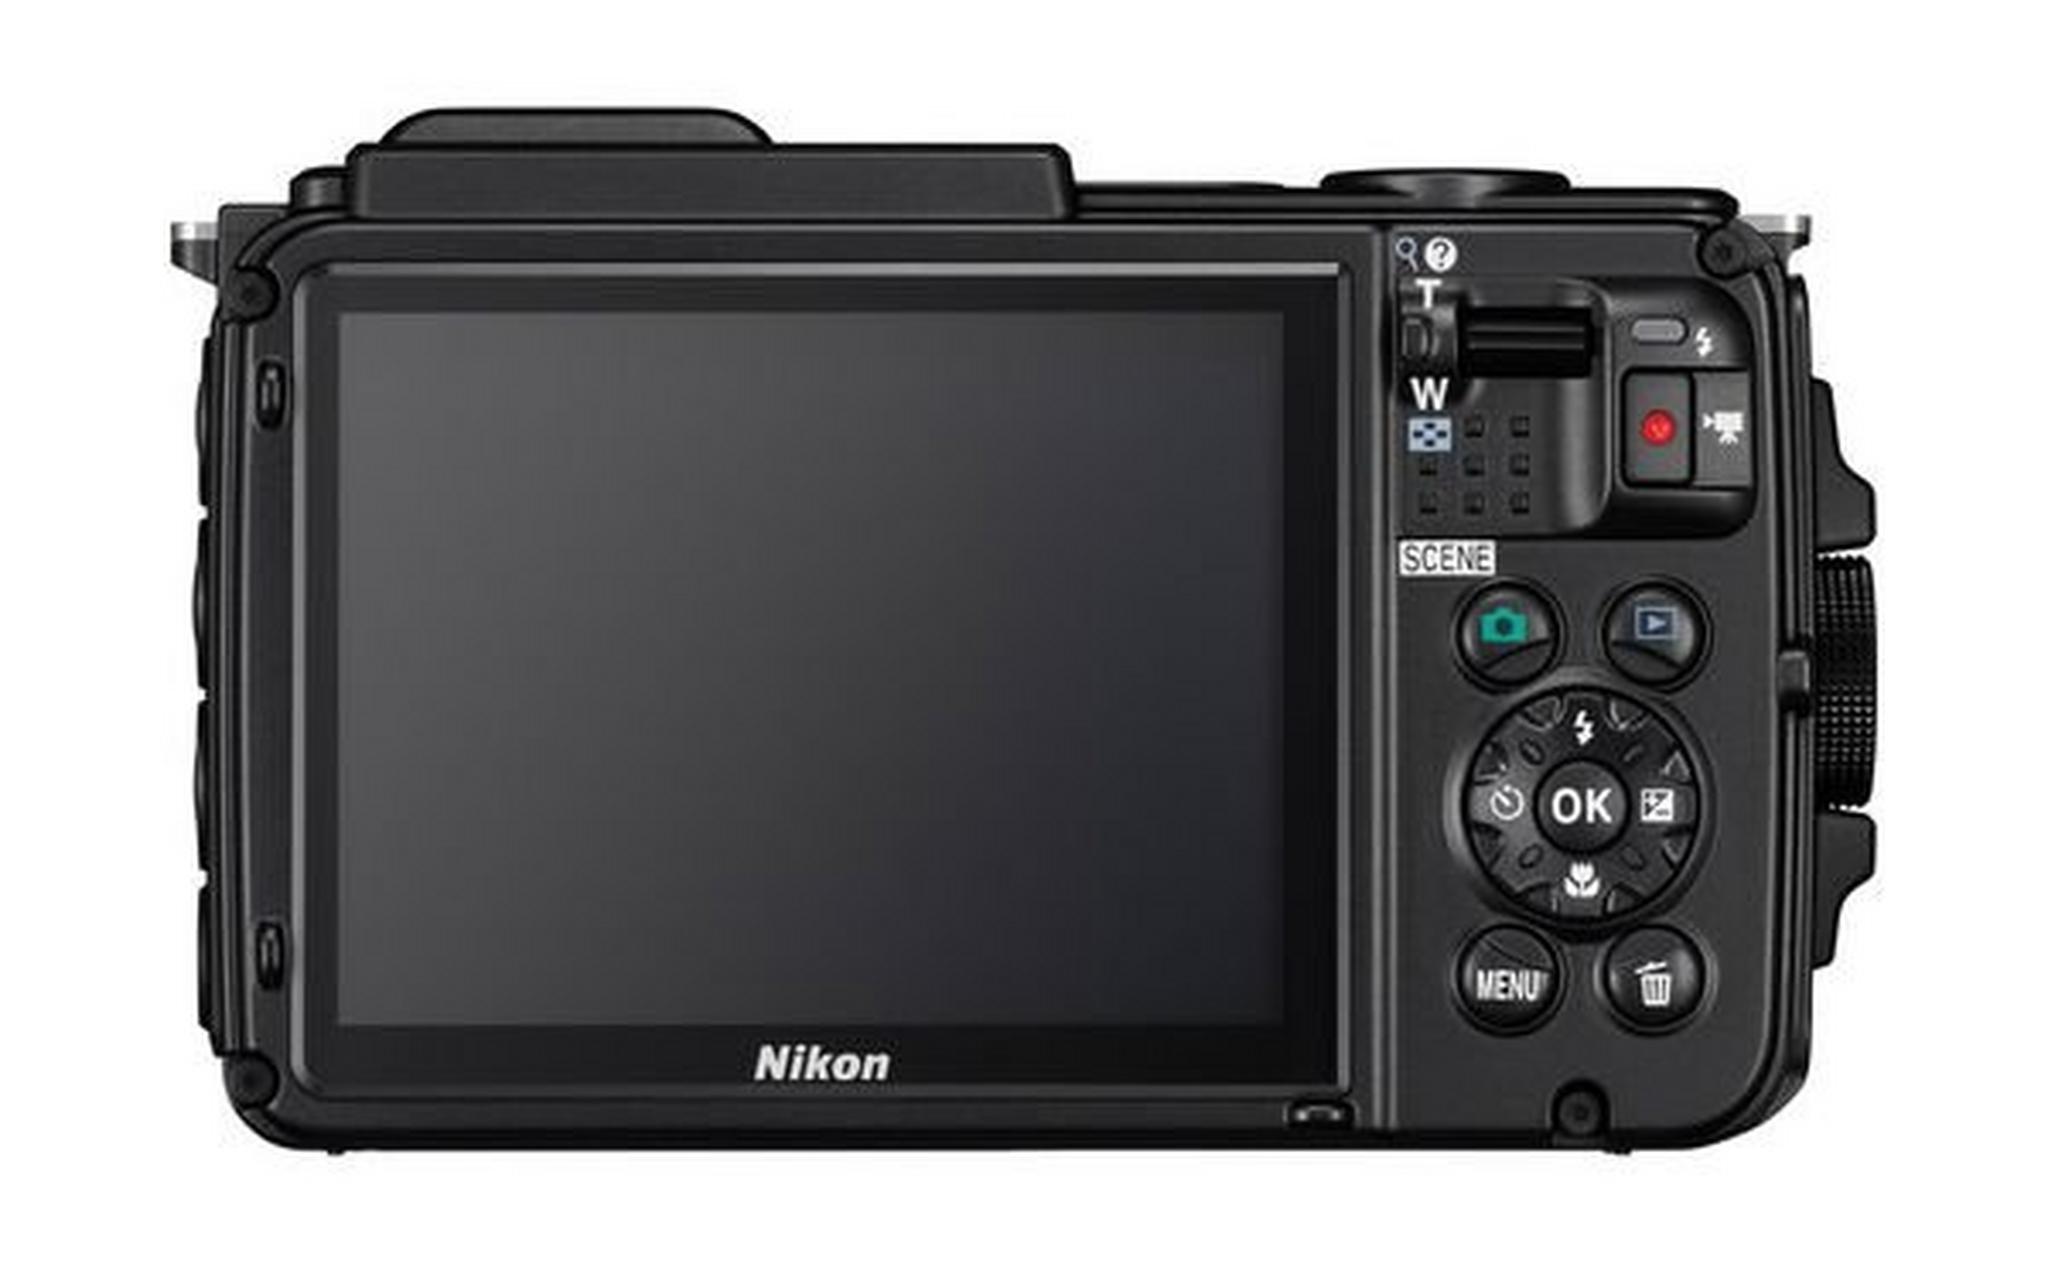 Nikon CoolPix AW130 16MP Waterproof Digital Camera - Black